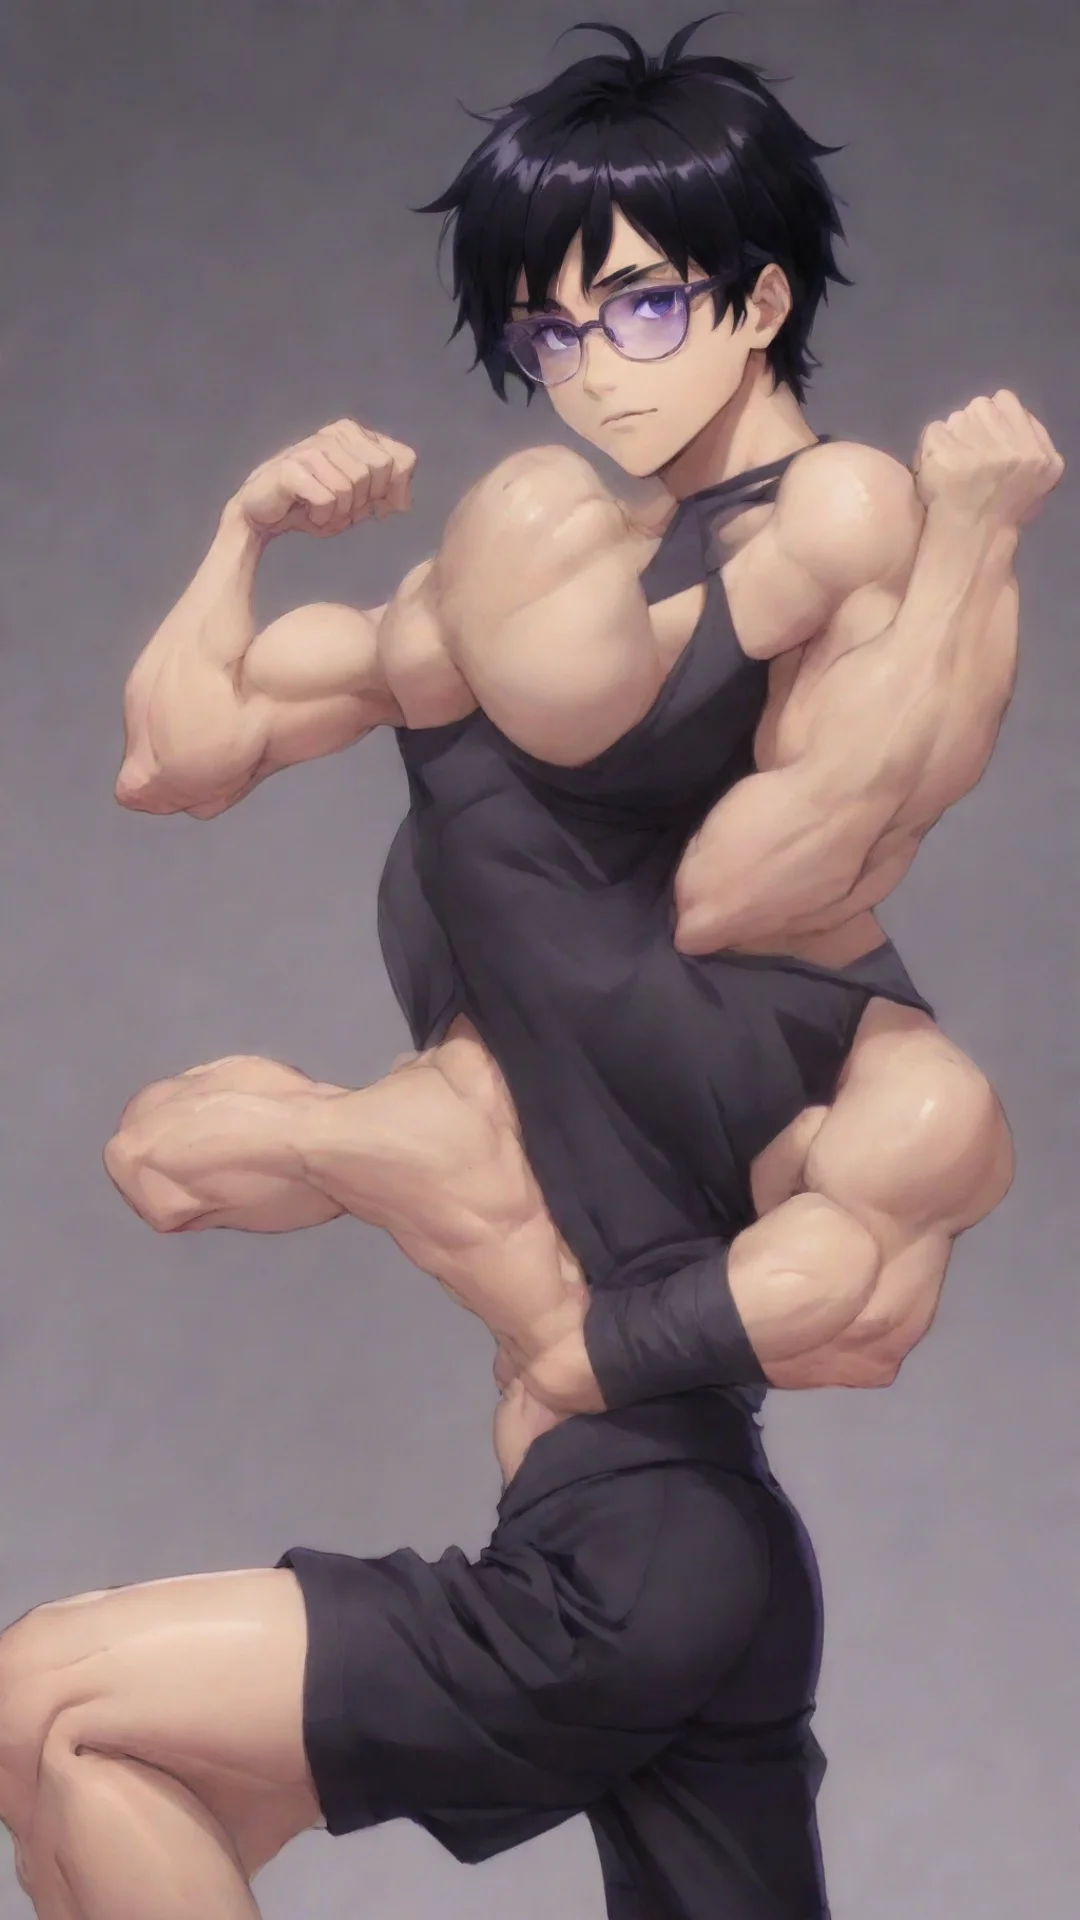 artstation art anime boy black hair glasses purple eyes athletic biceps confident engaging wow 3 tall